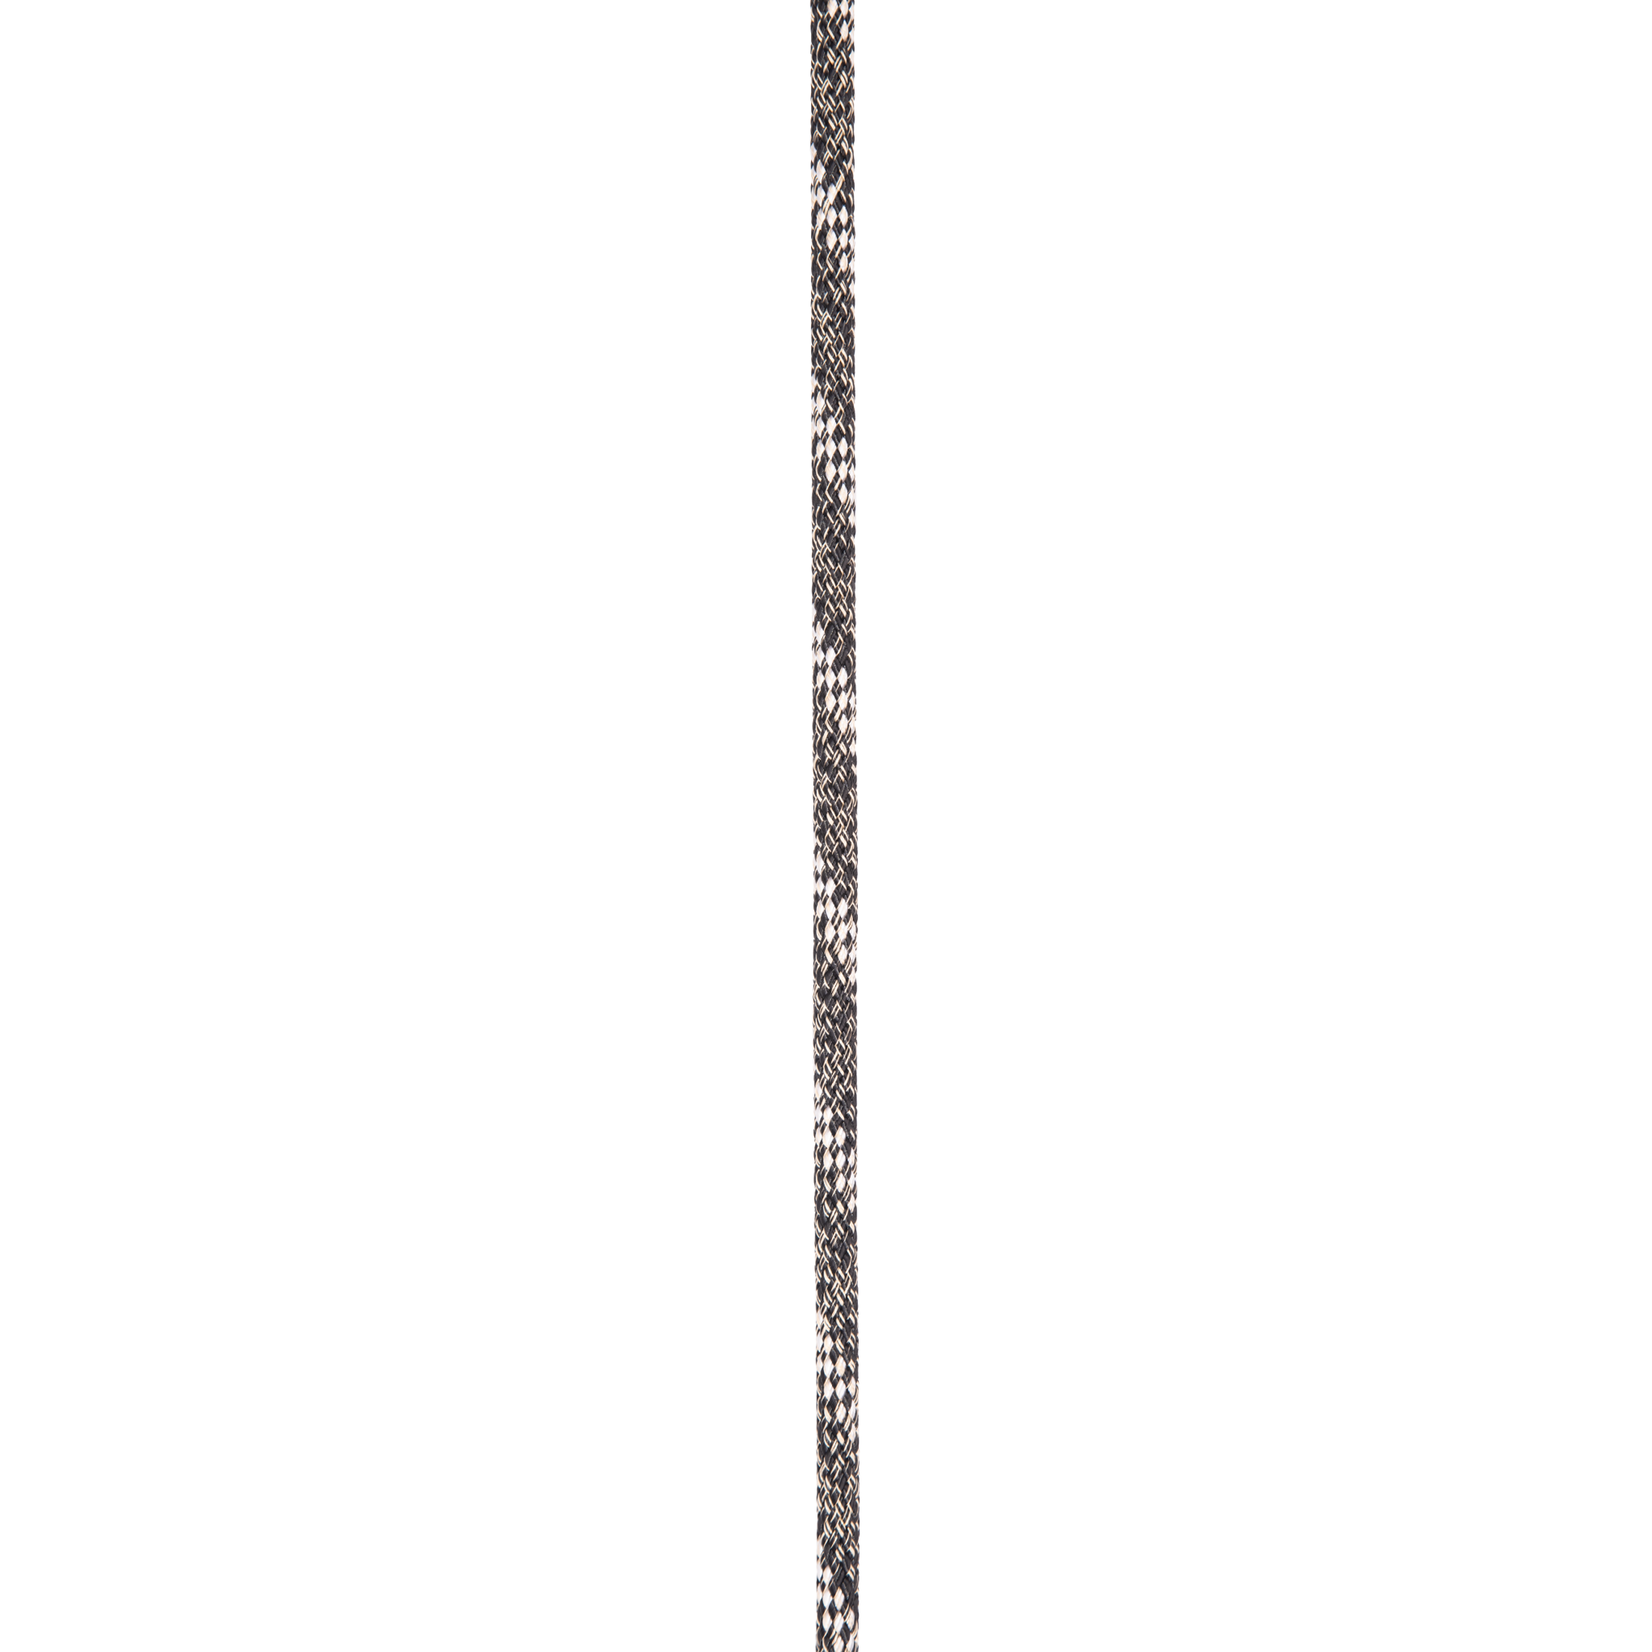 Edelrid Edelrid Interstatic Protect 11mm, 46m|150', night